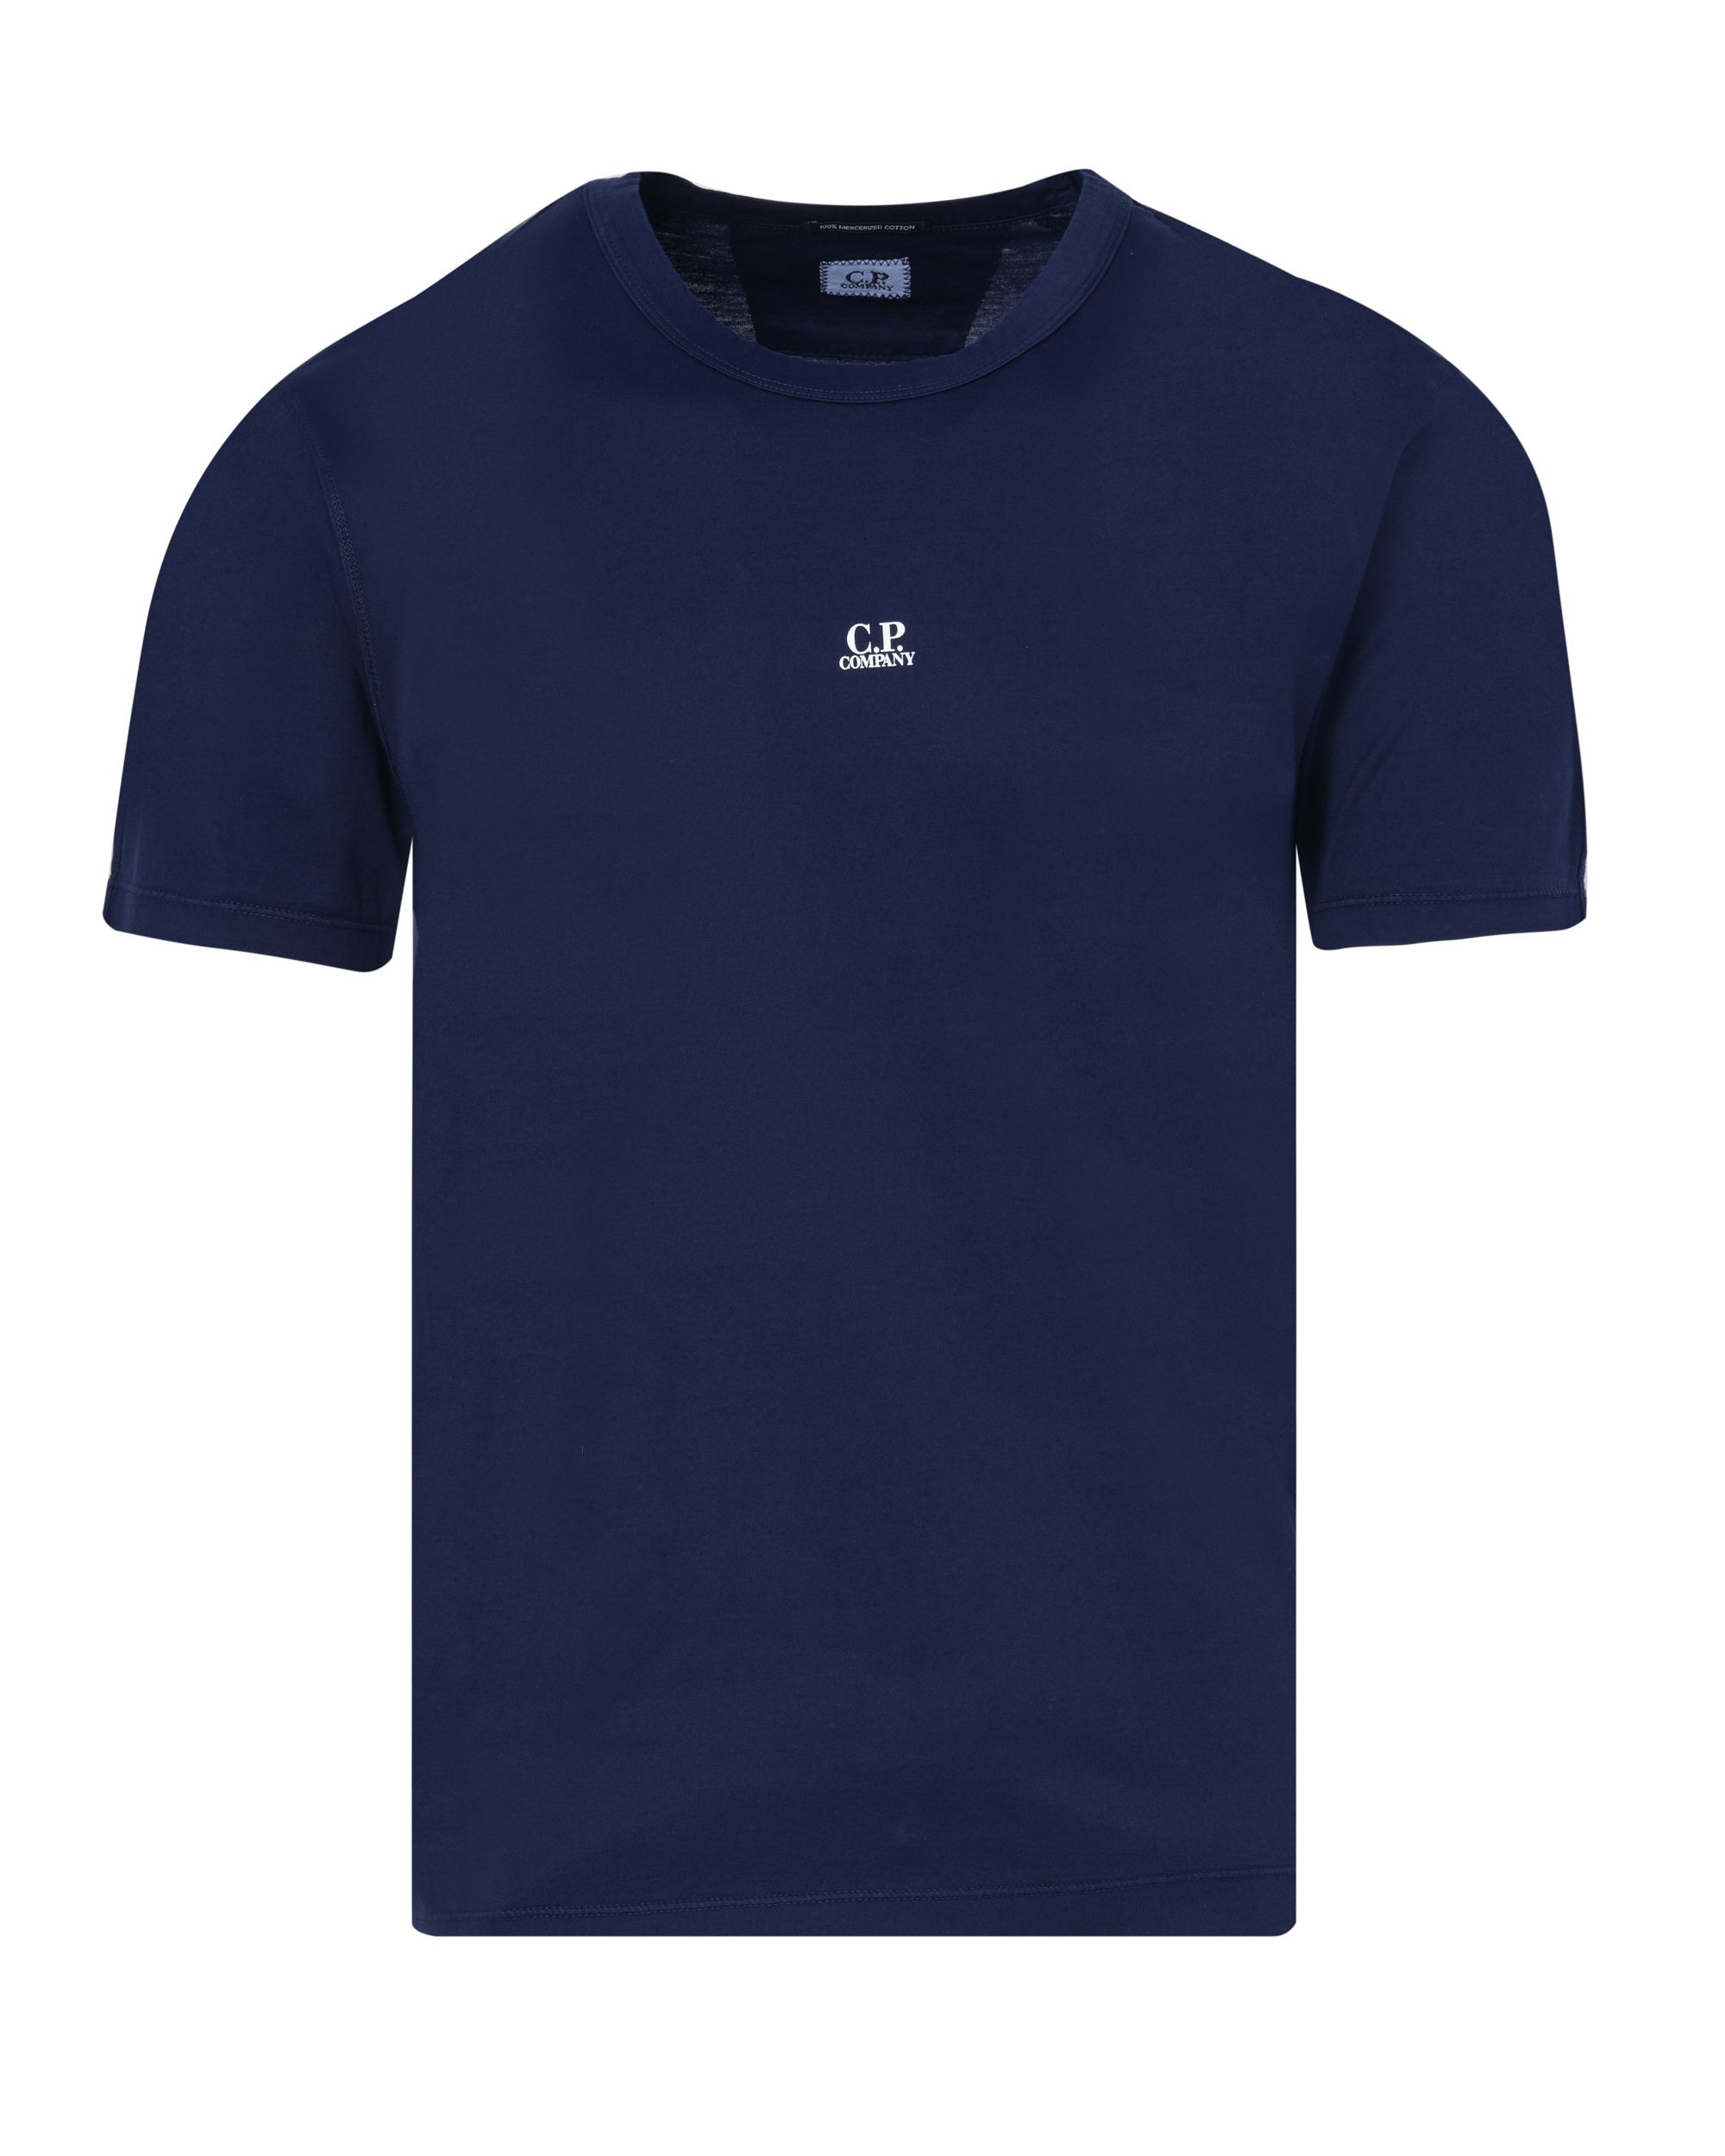 C.P Company T-shirt KM Donker blauw 082474-001-L